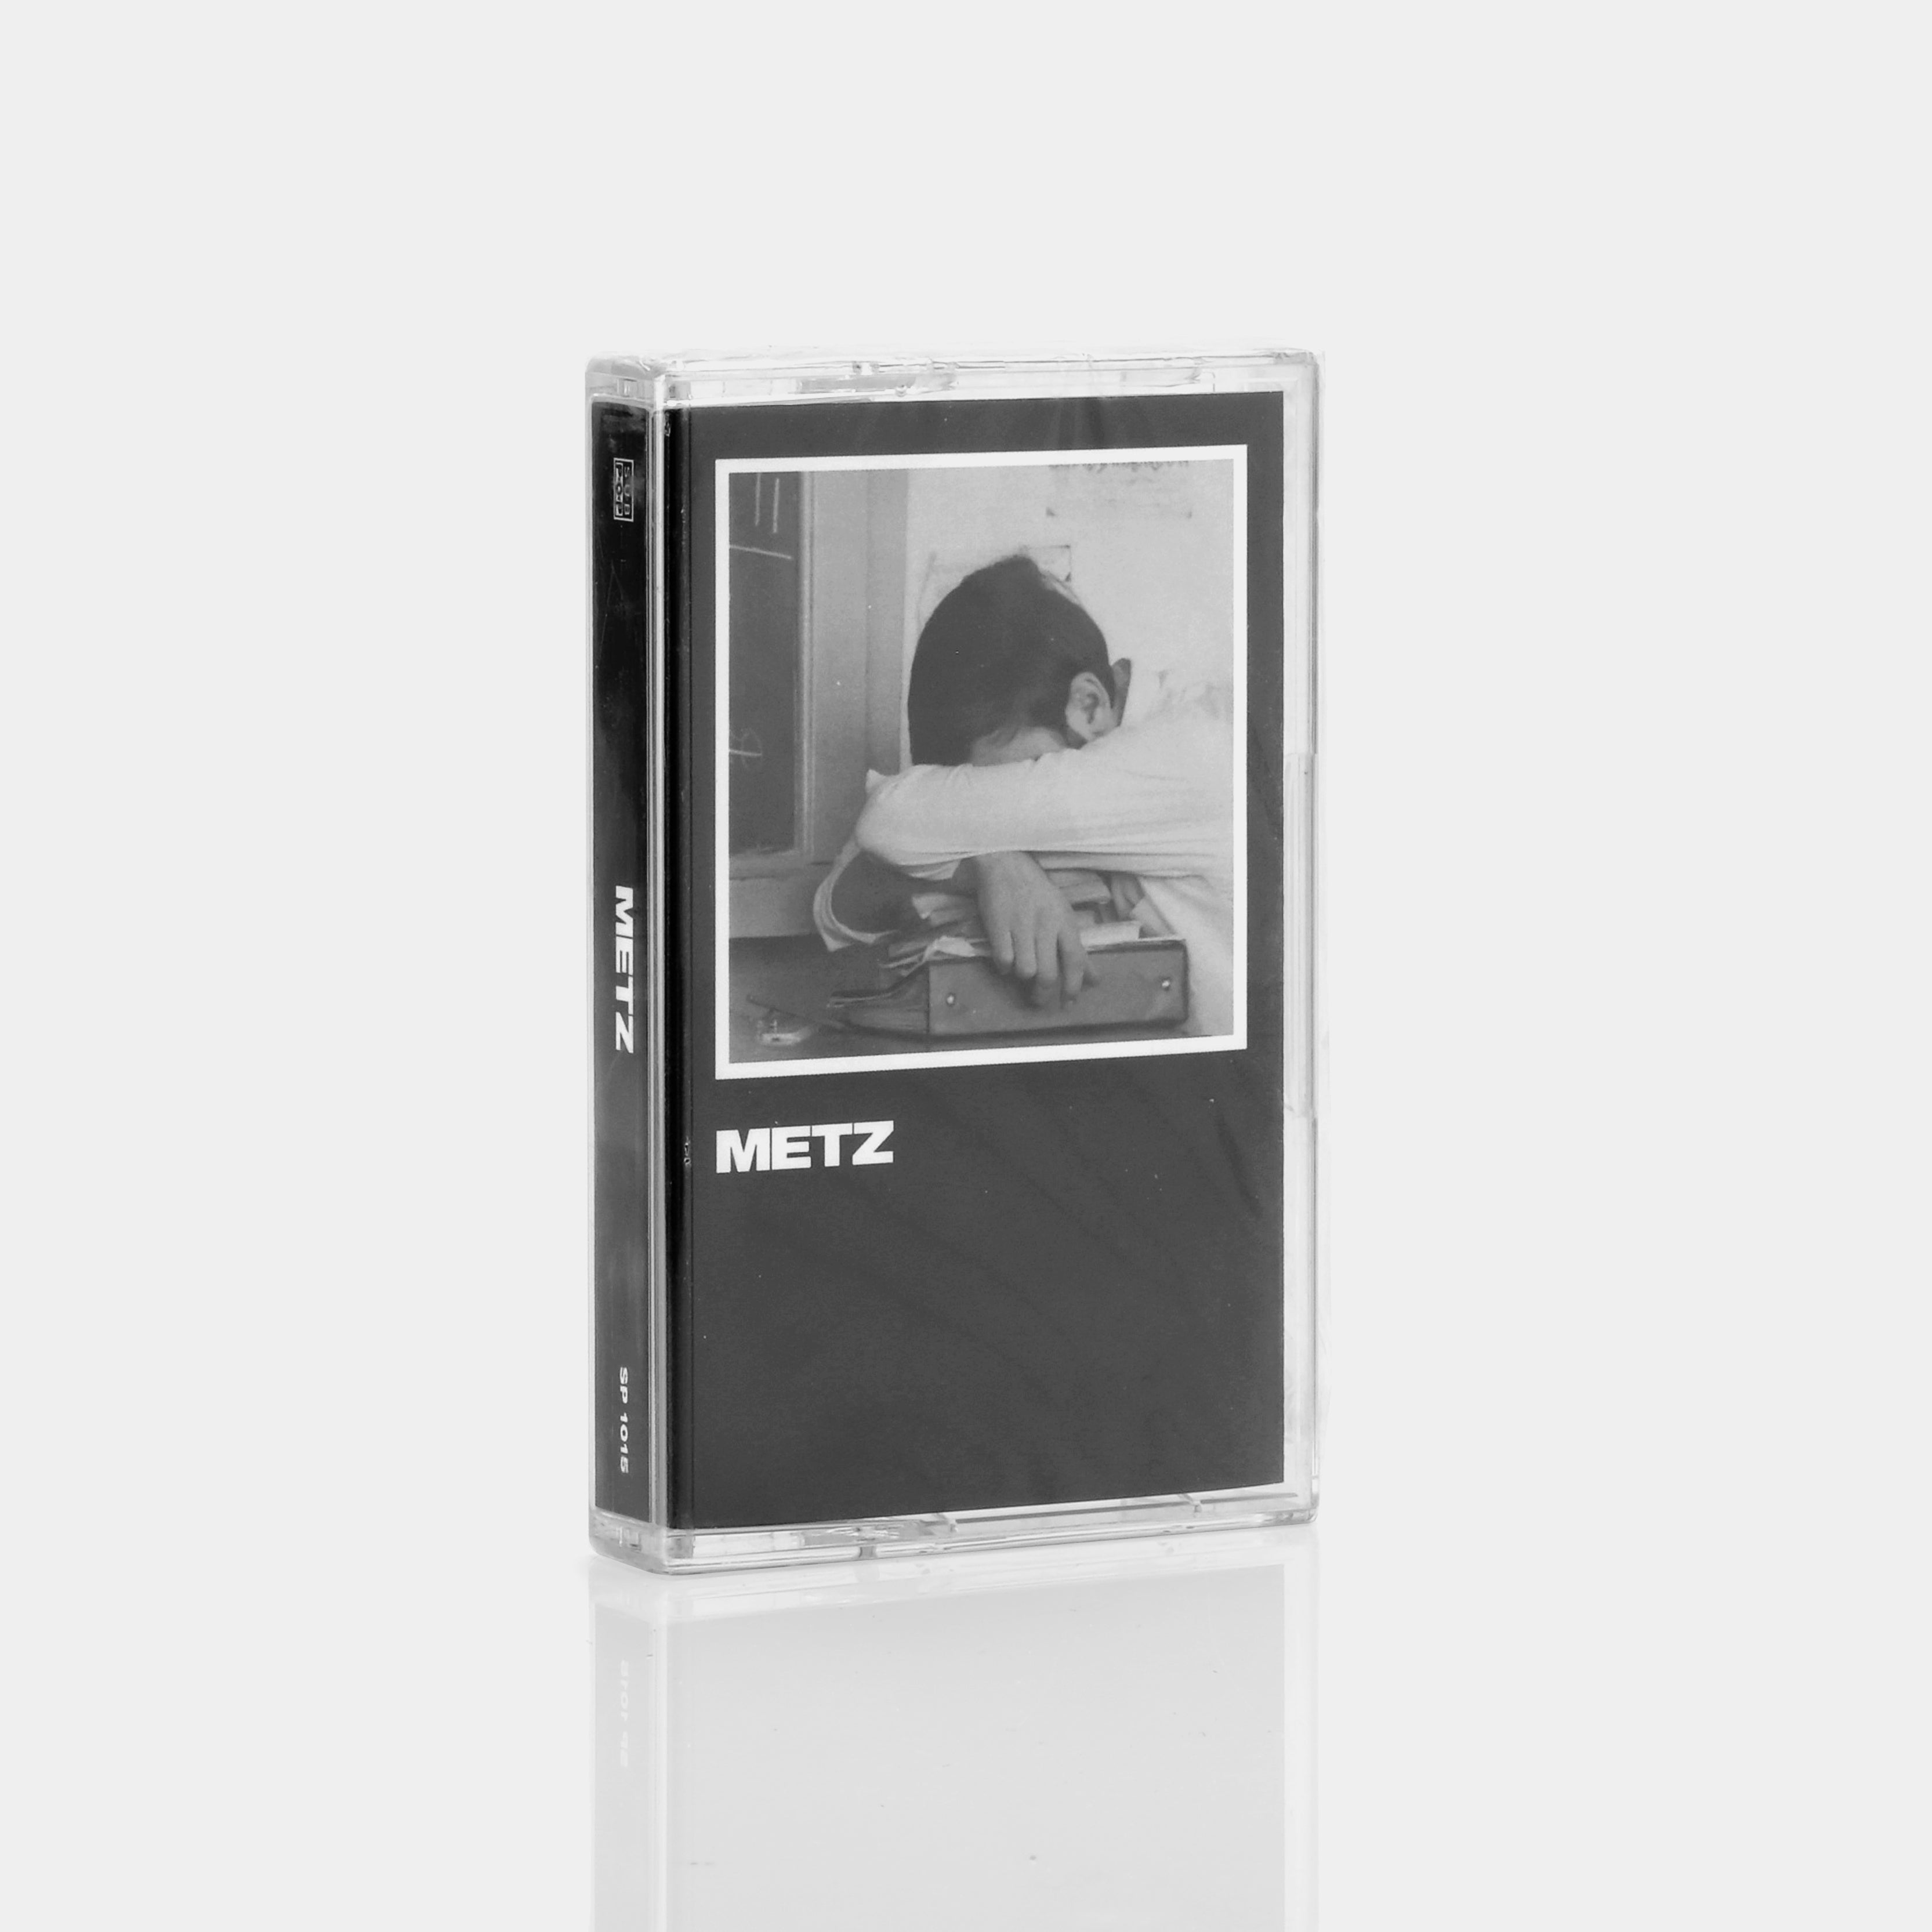 Metz - Metz Cassette Tape